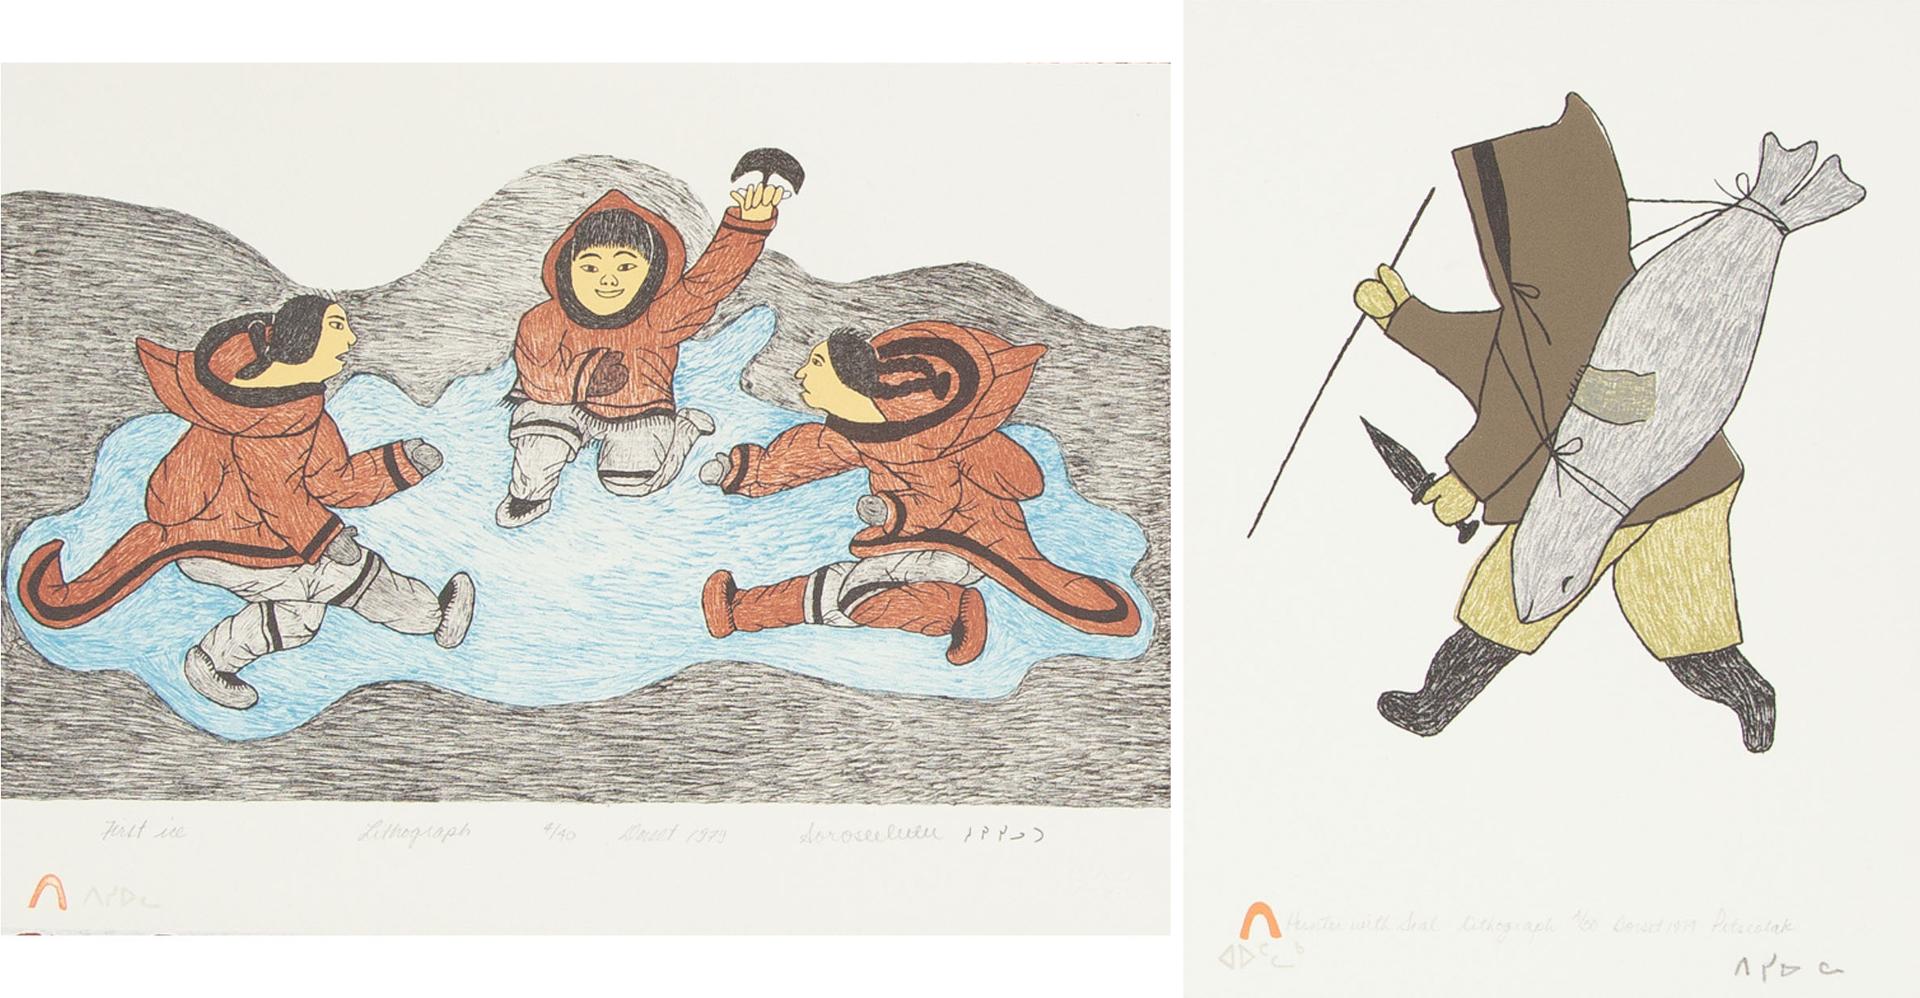 Pitseolak Ashoona (1904-1983) - Hunter & Seal, First Ice